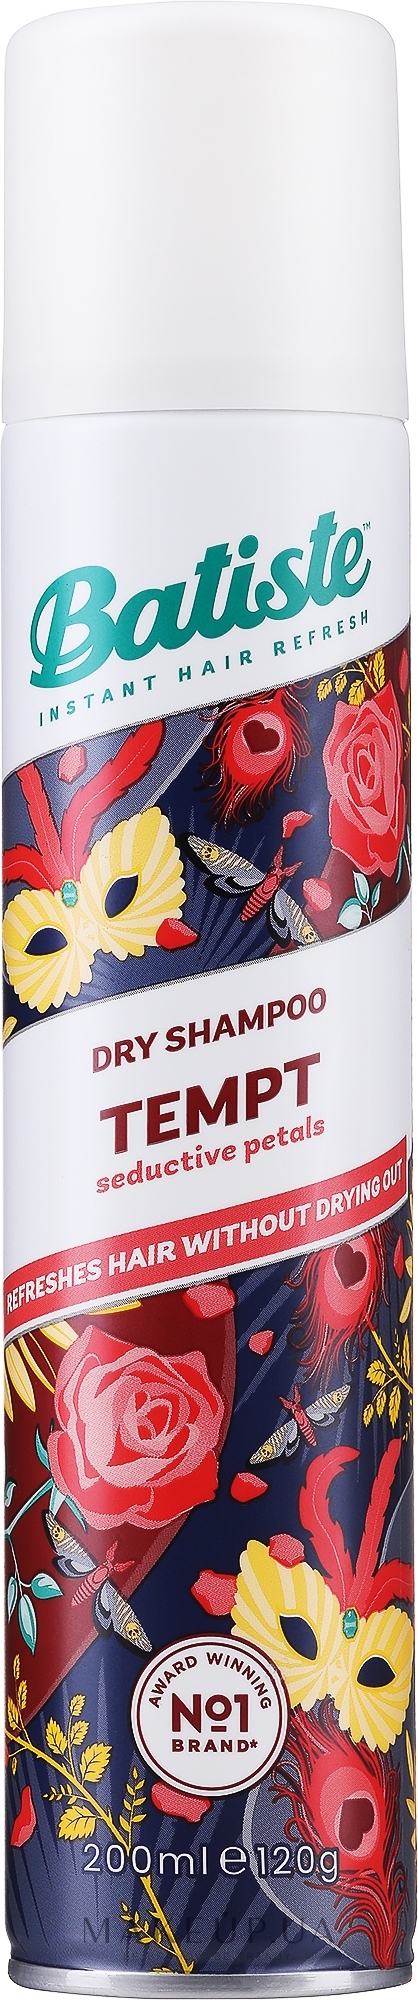 Сухий шампунь для жирного волосся - Batiste Tempt Dry Shampoo — фото 200ml